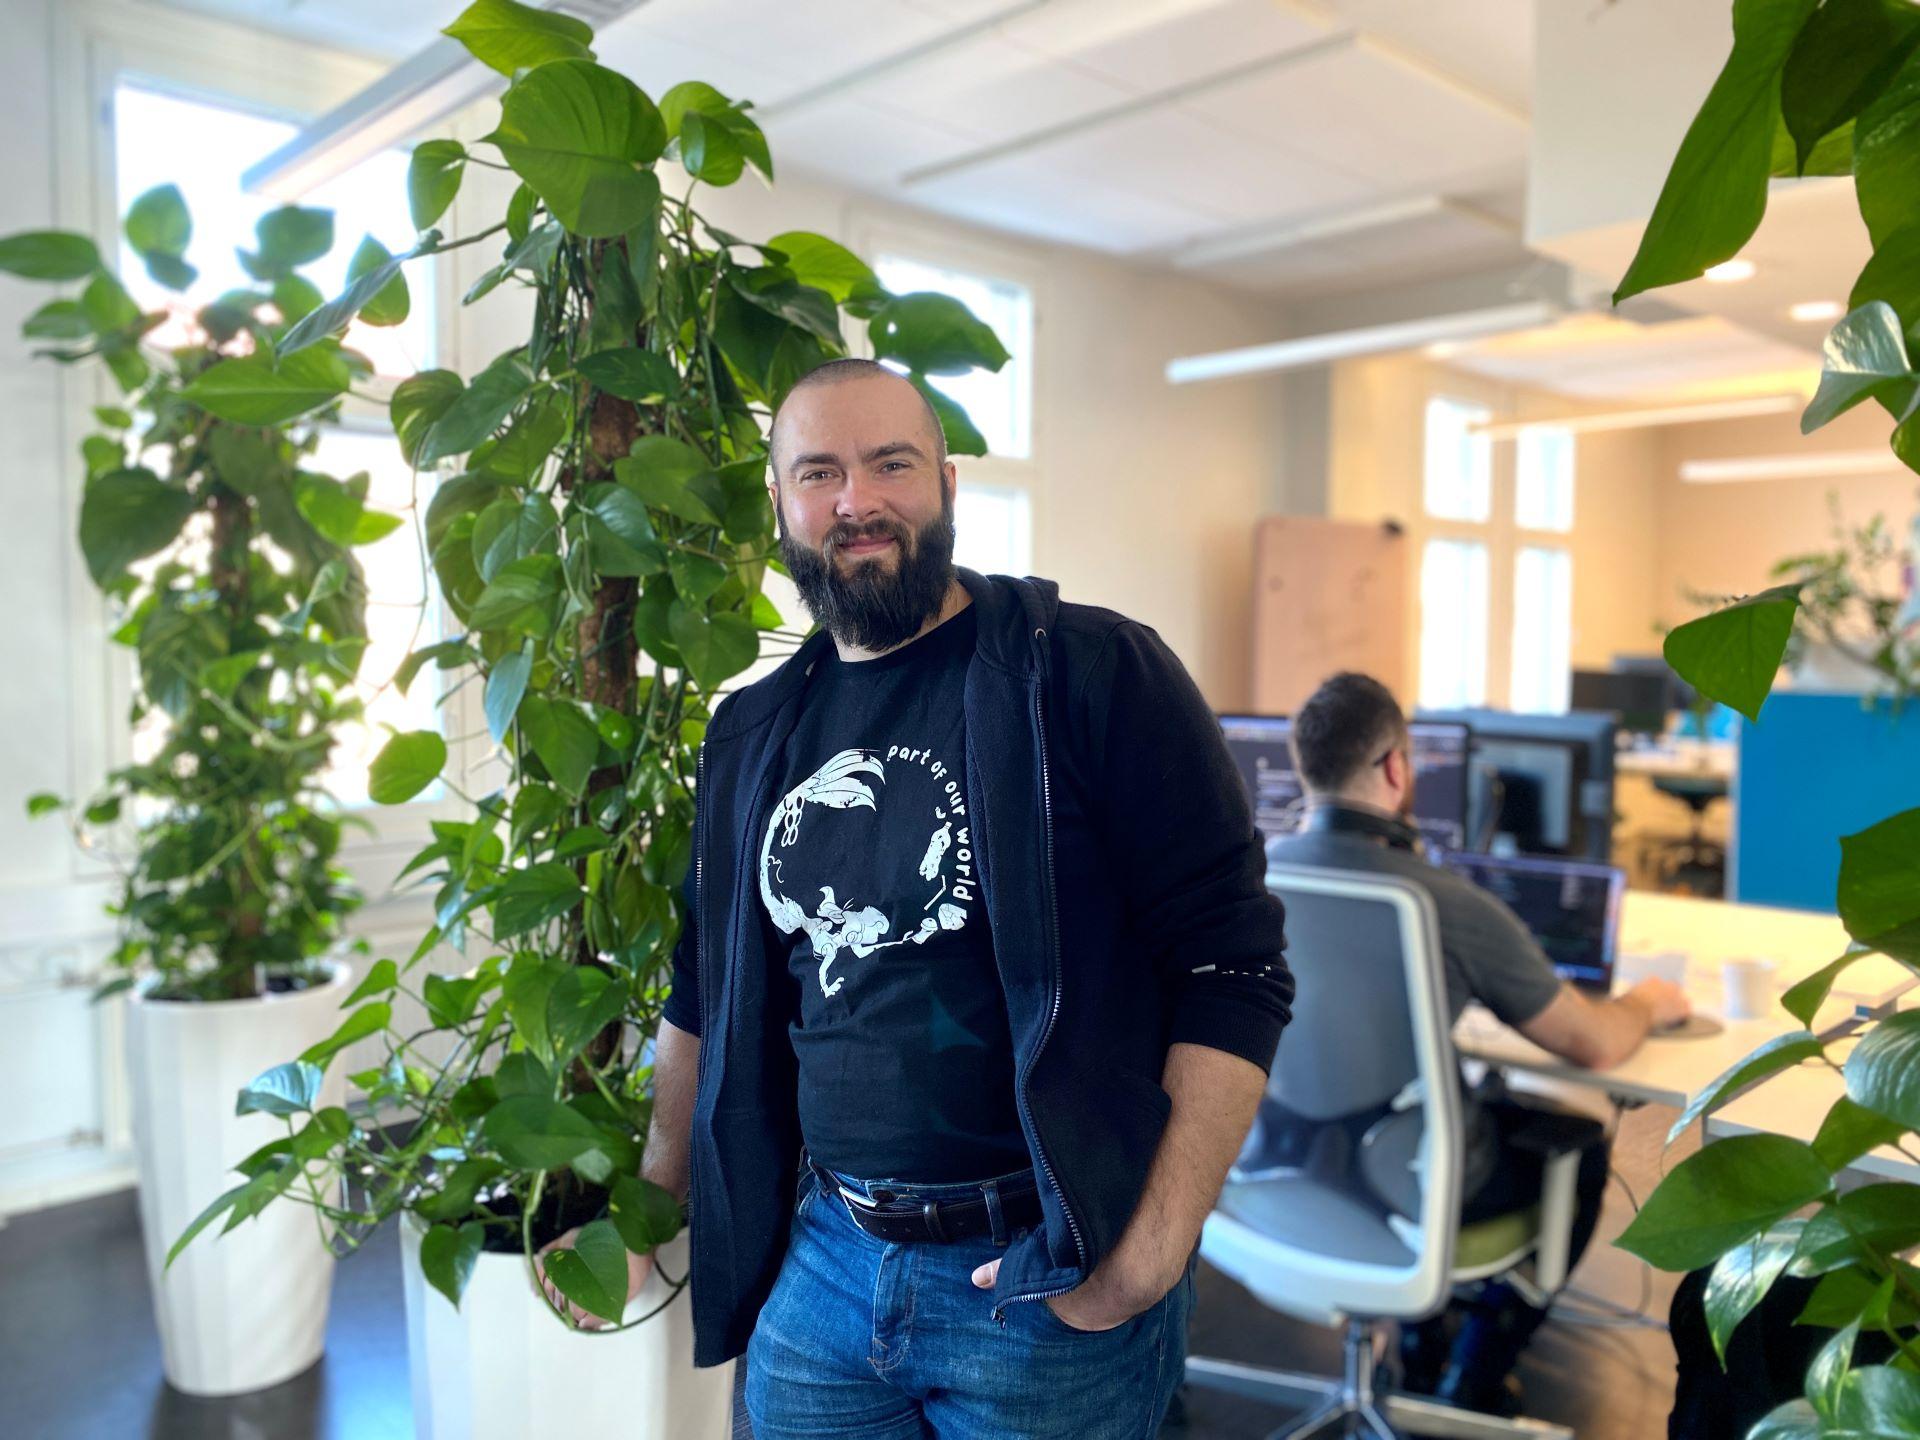 Janne Koponen smiling at Wunder Helsinki office with green plants in the background.